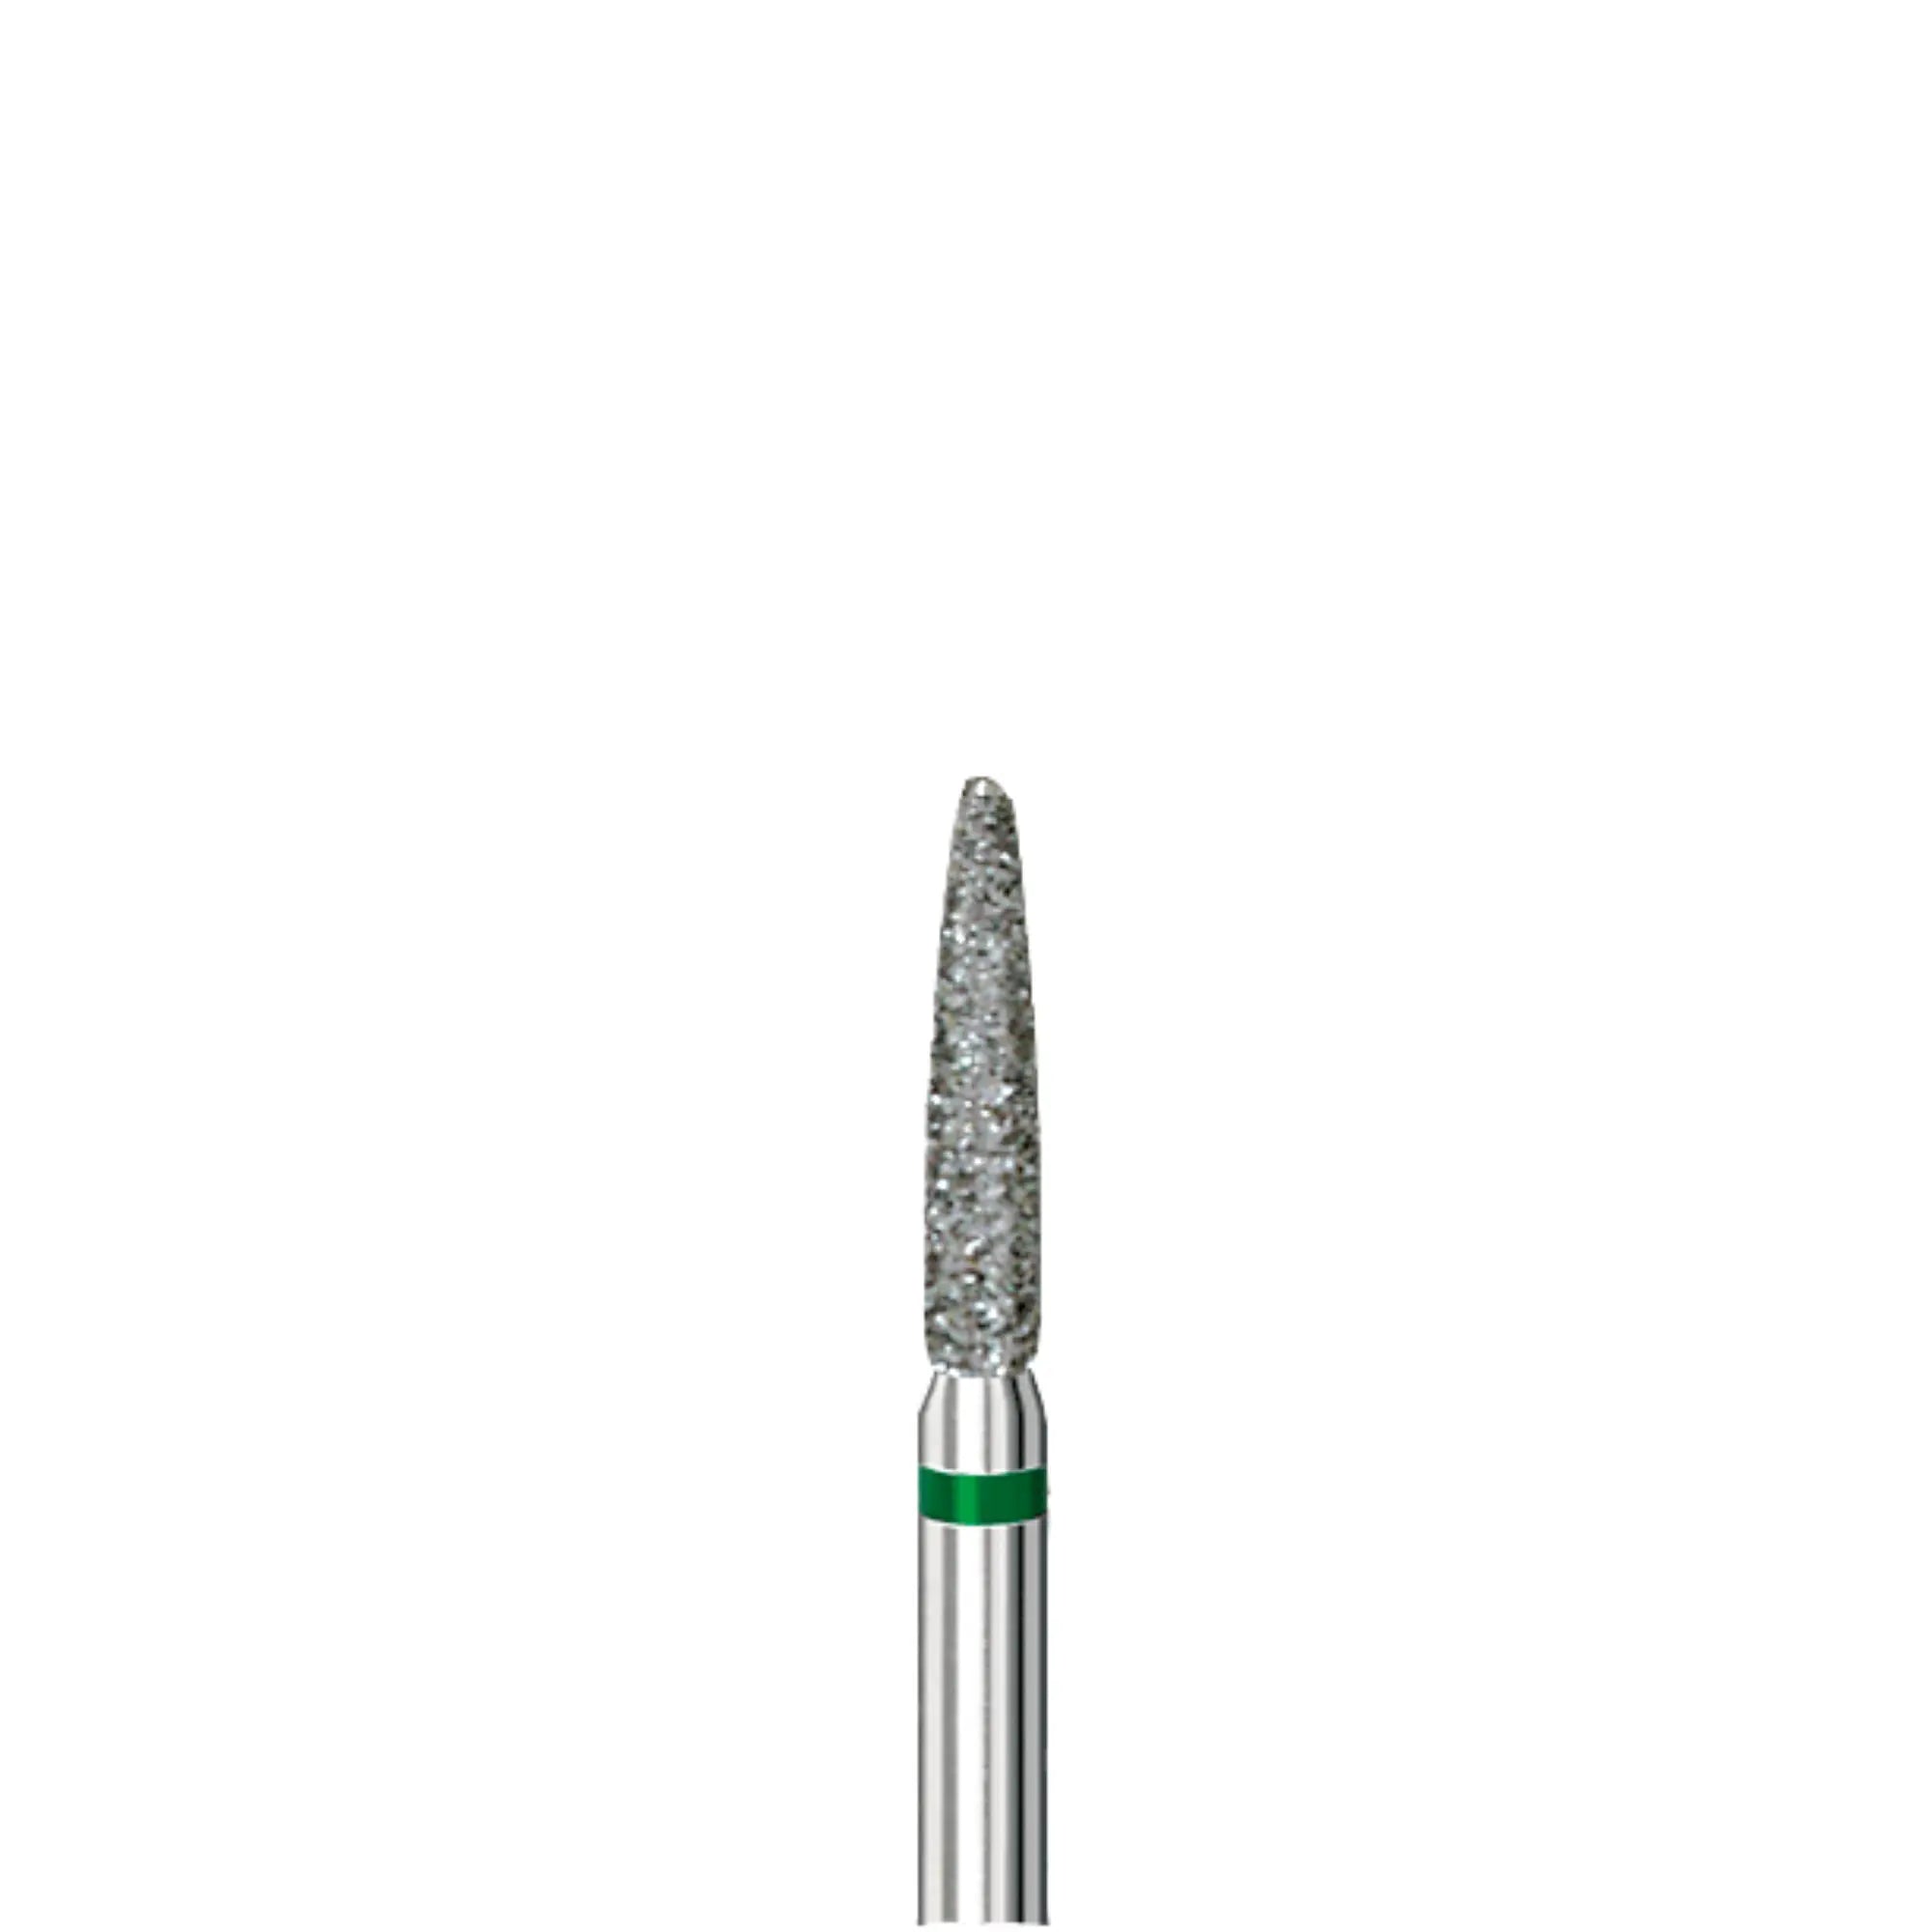 Fraise diamant - Abrasion callosités et dégrossissage ongle - 1,9 mm - 6863 - Busch Busch